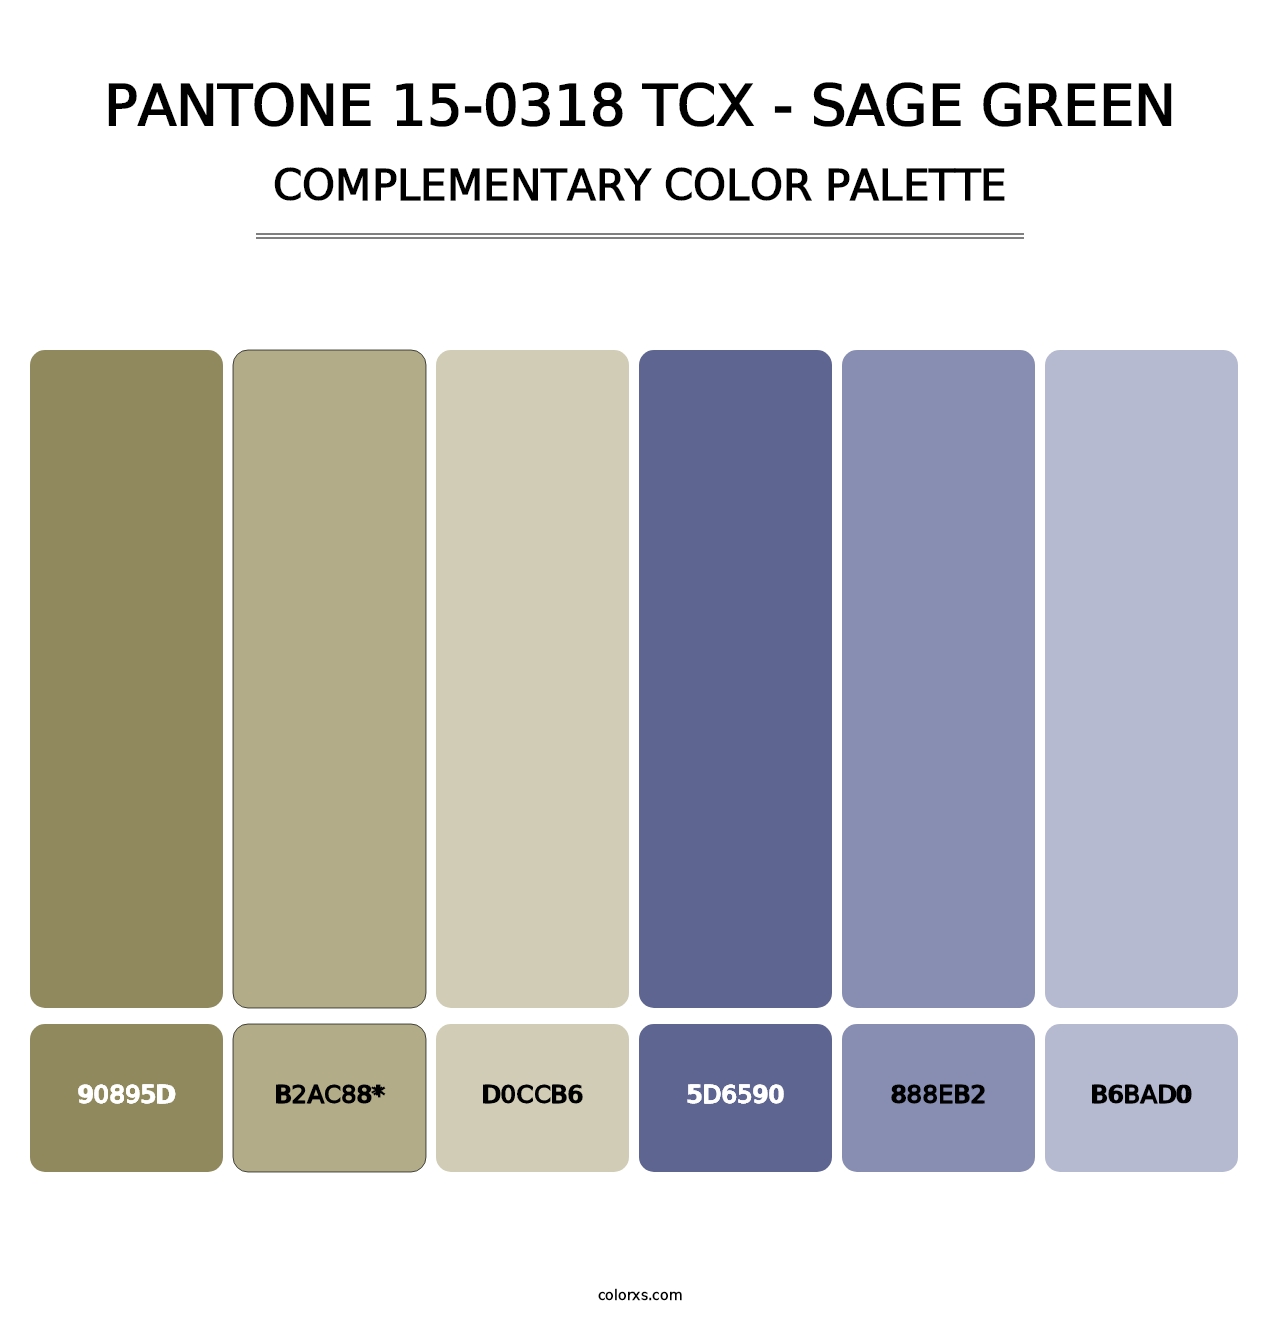 PANTONE 15-0318 TCX - Sage Green - Complementary Color Palette